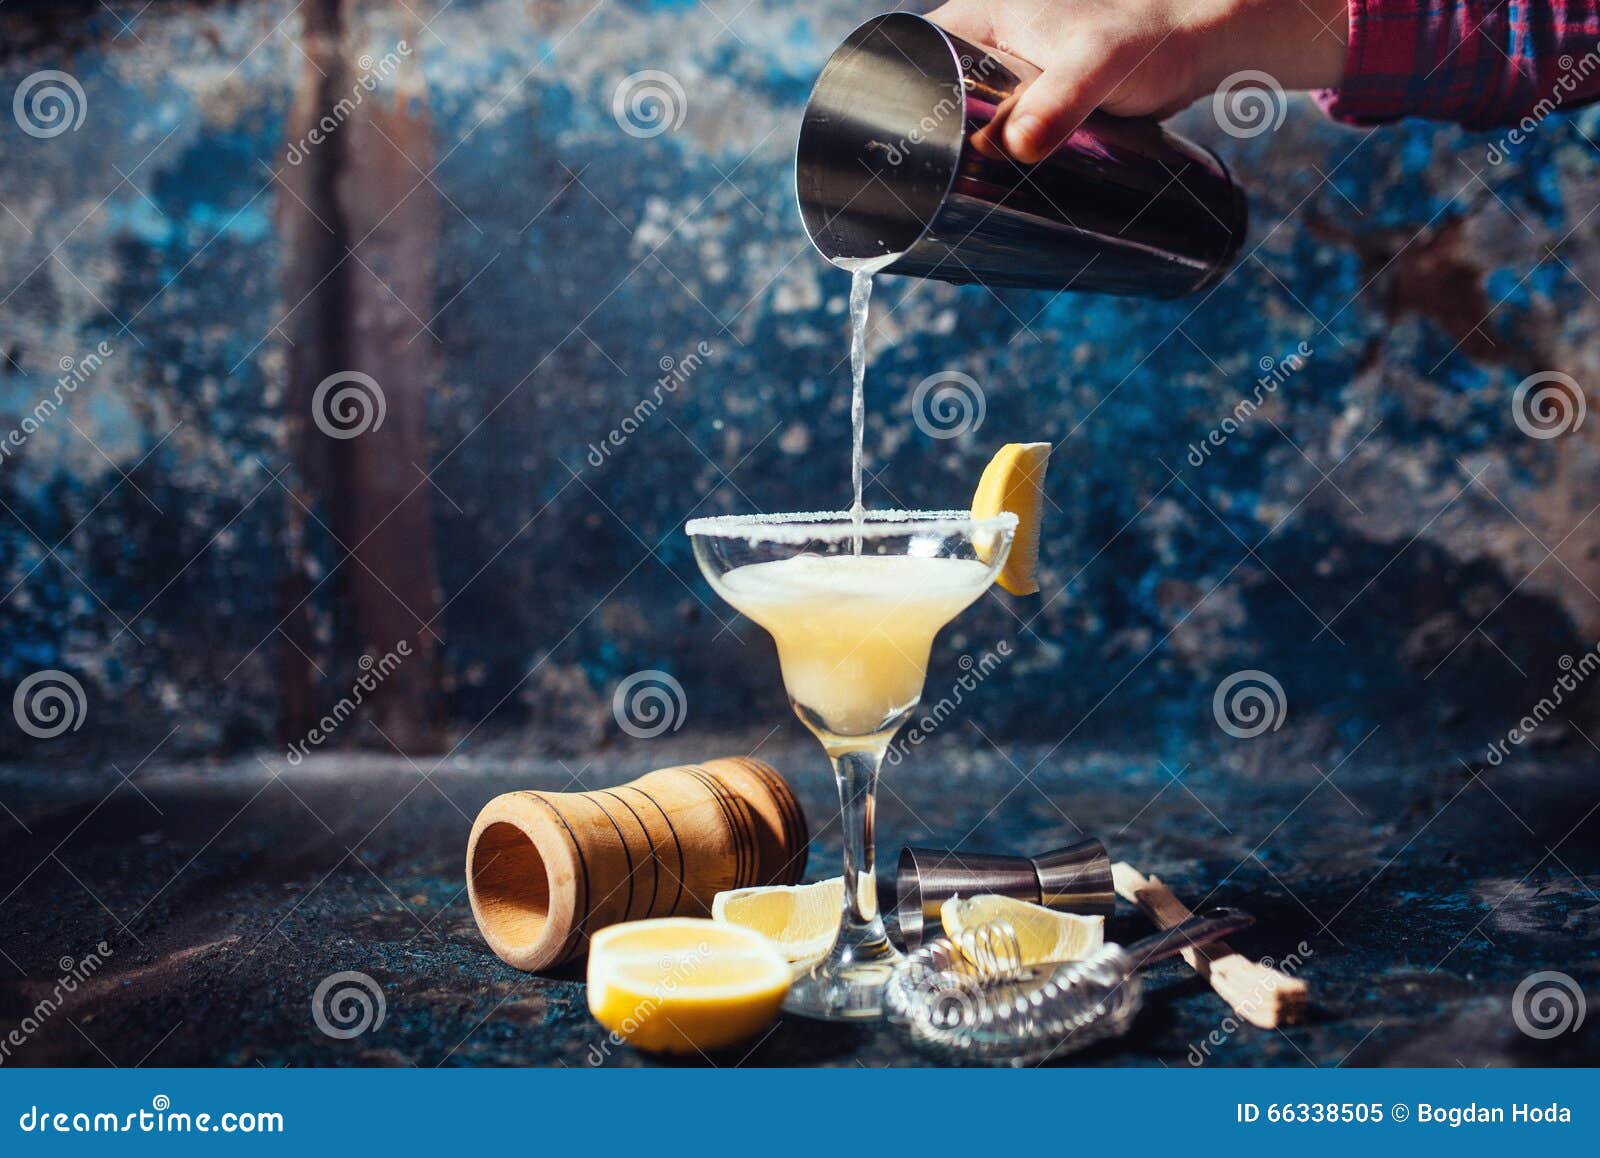 bartender pouring lime margarita in fancy glass at restaurant